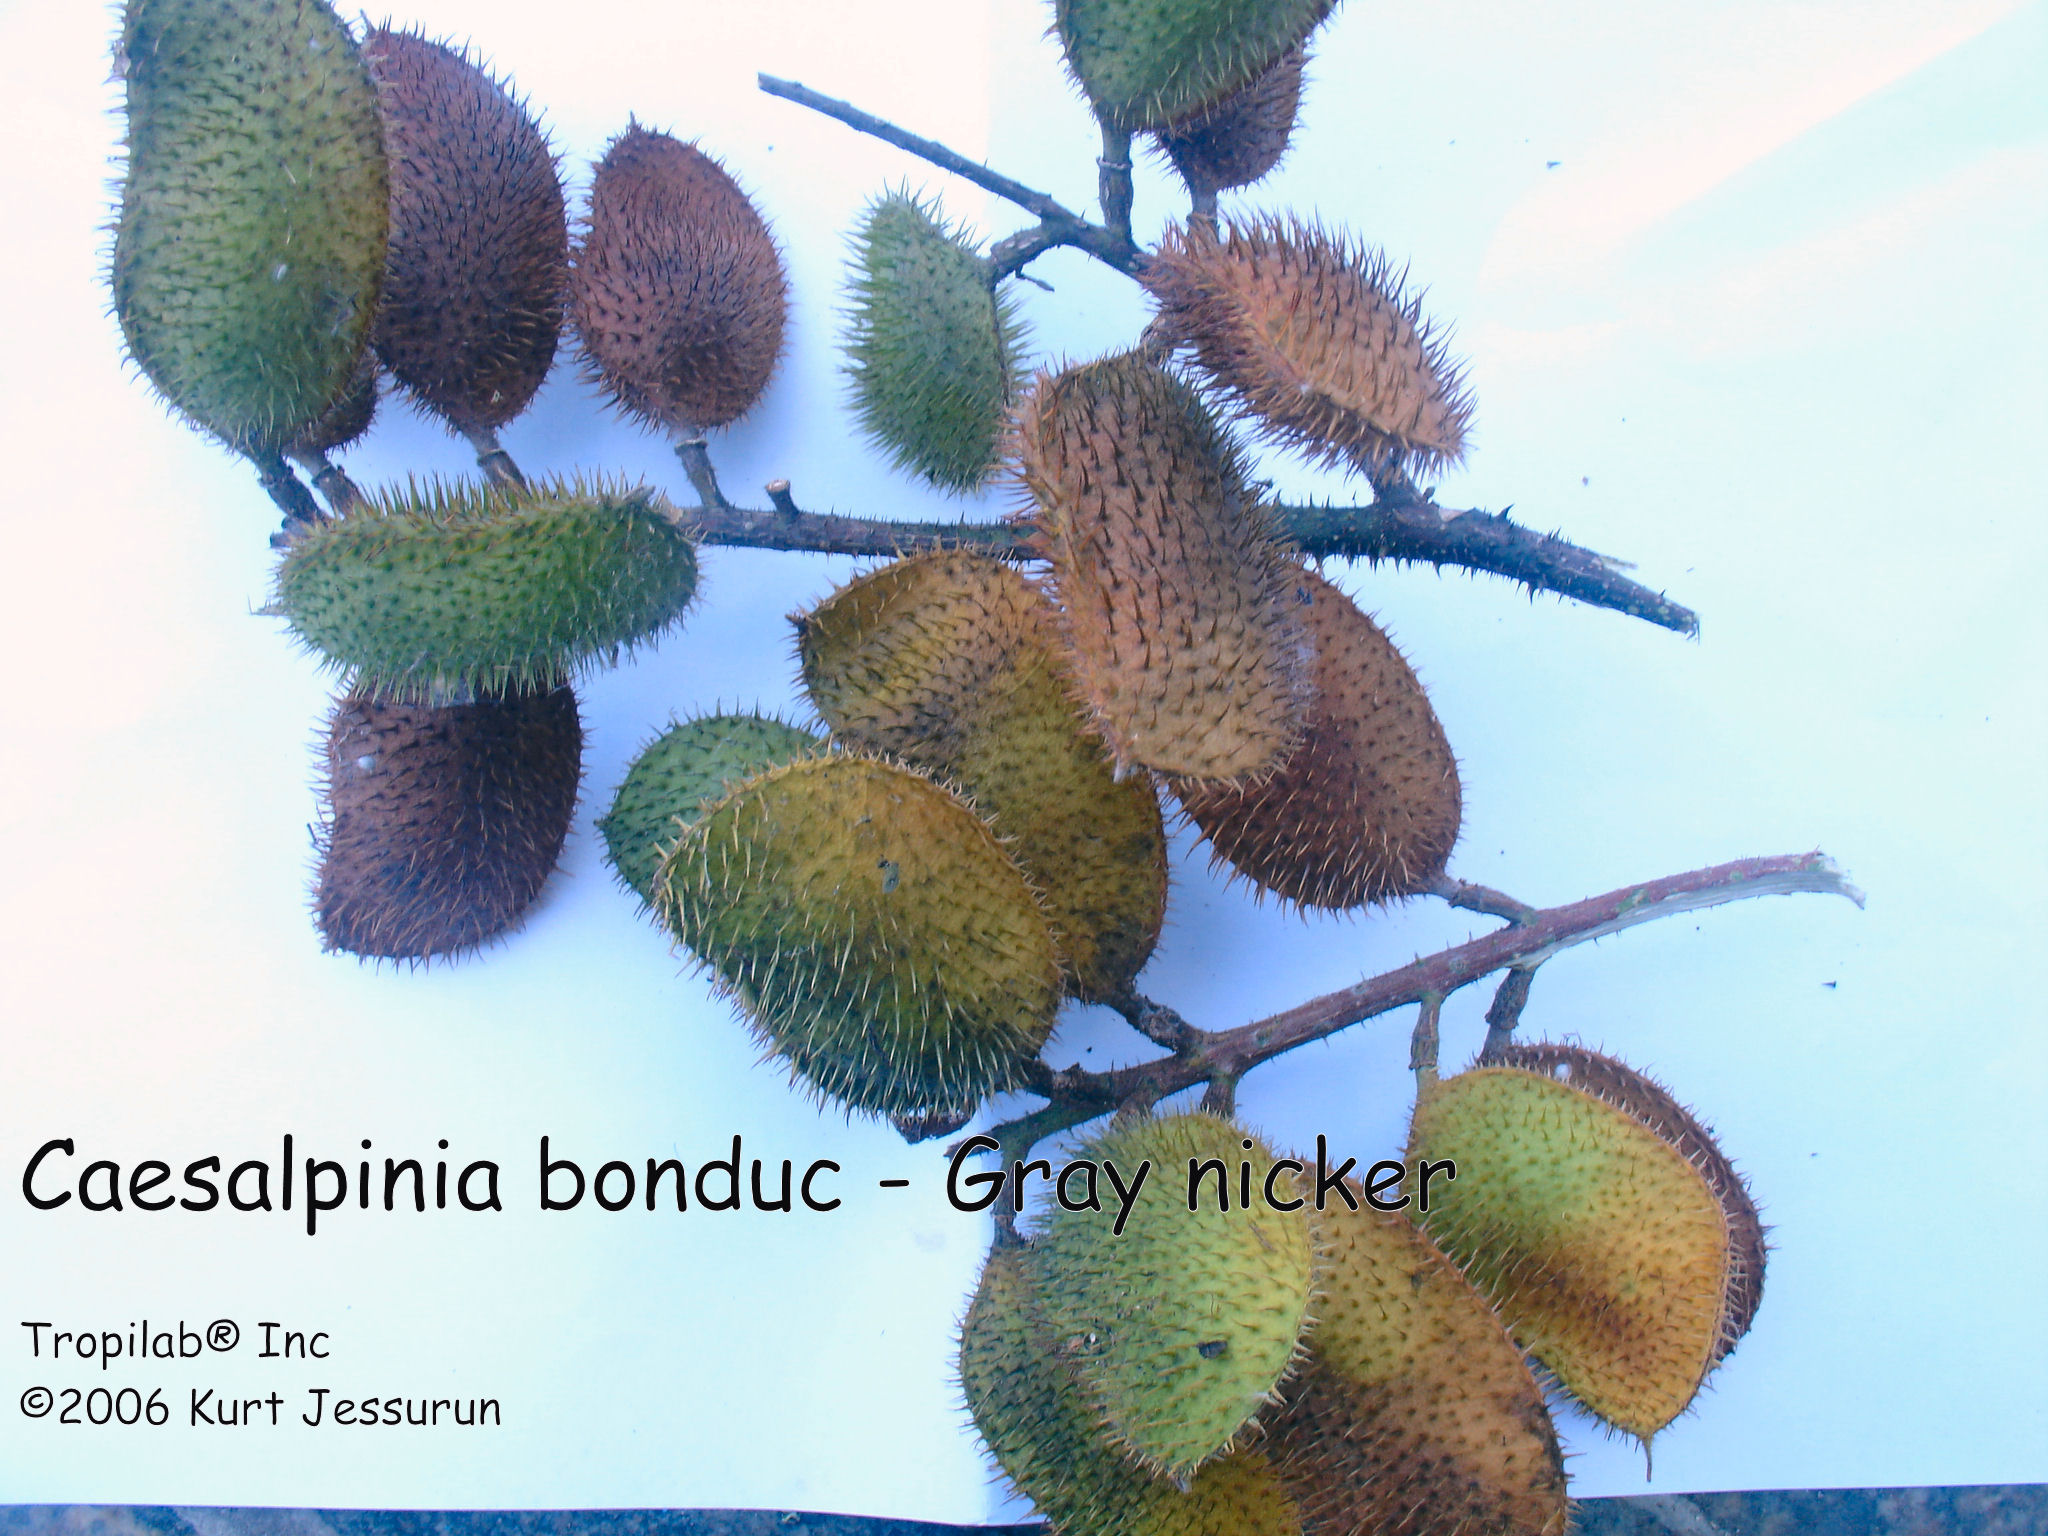 Caesalpinia bonduc - Gray nicker